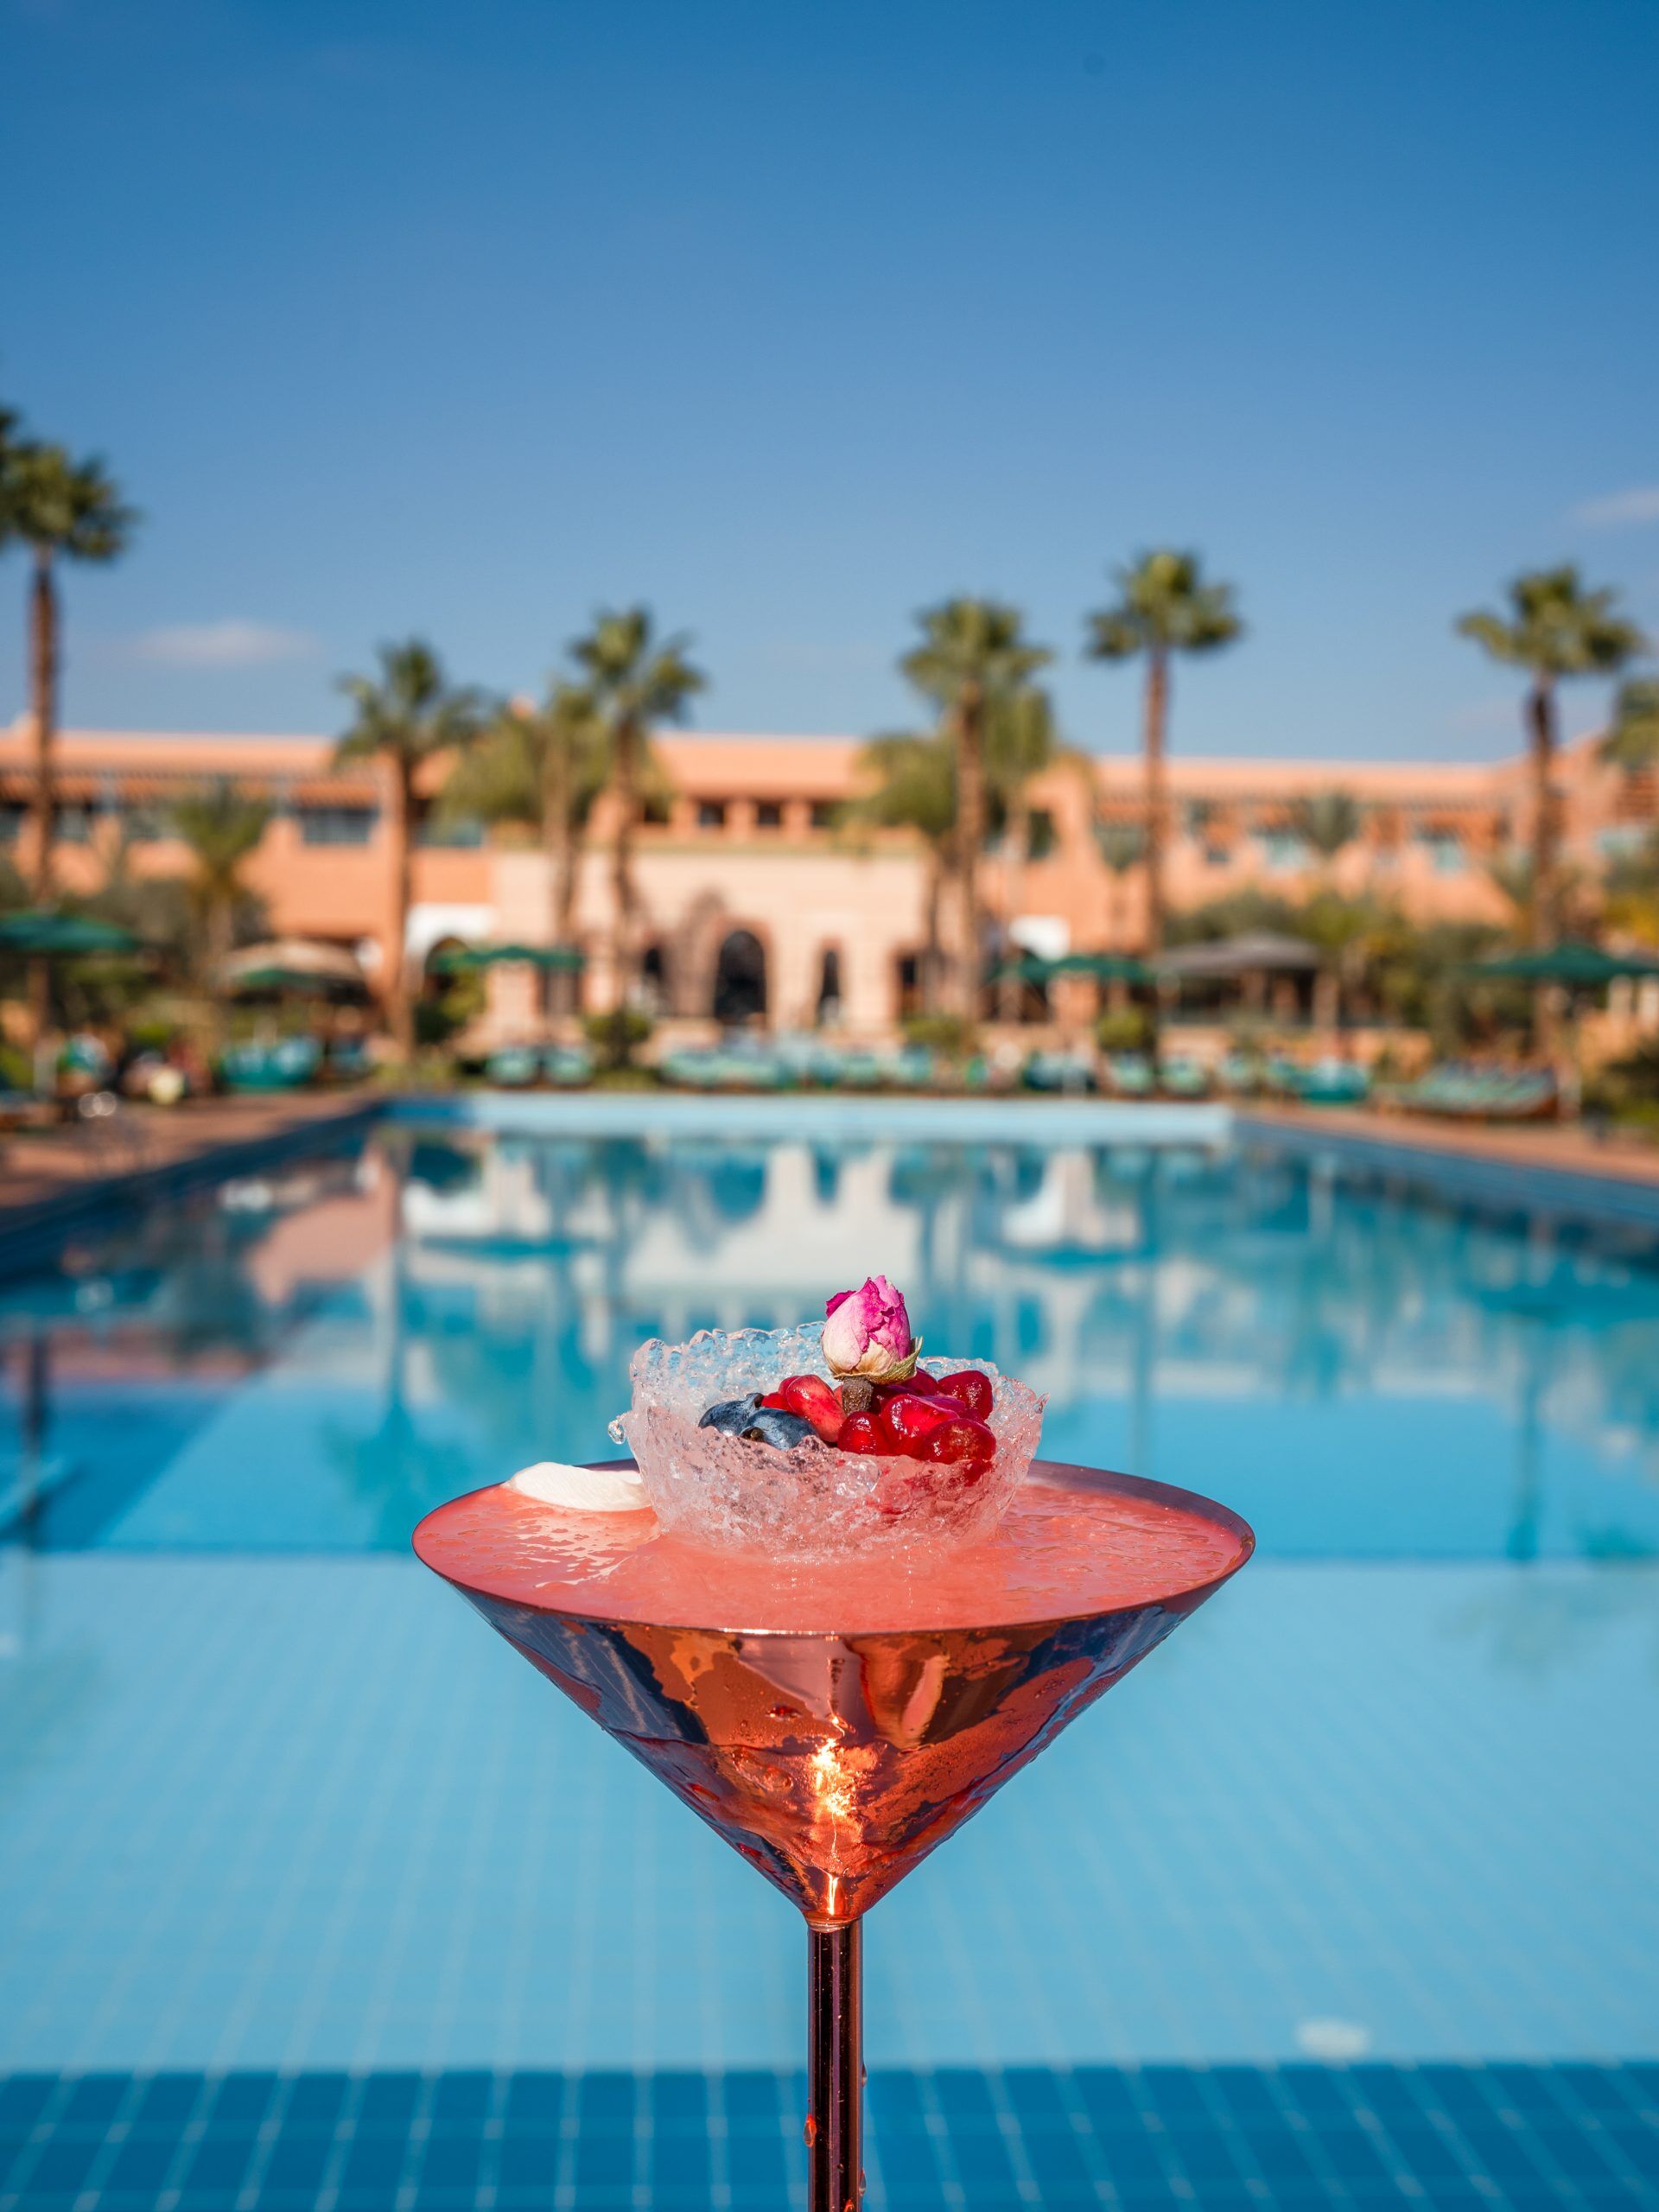 Atelier cosmétique au JAAL Riad Resort + DayPass - Marrakech - Maroc DSC07370 scaled